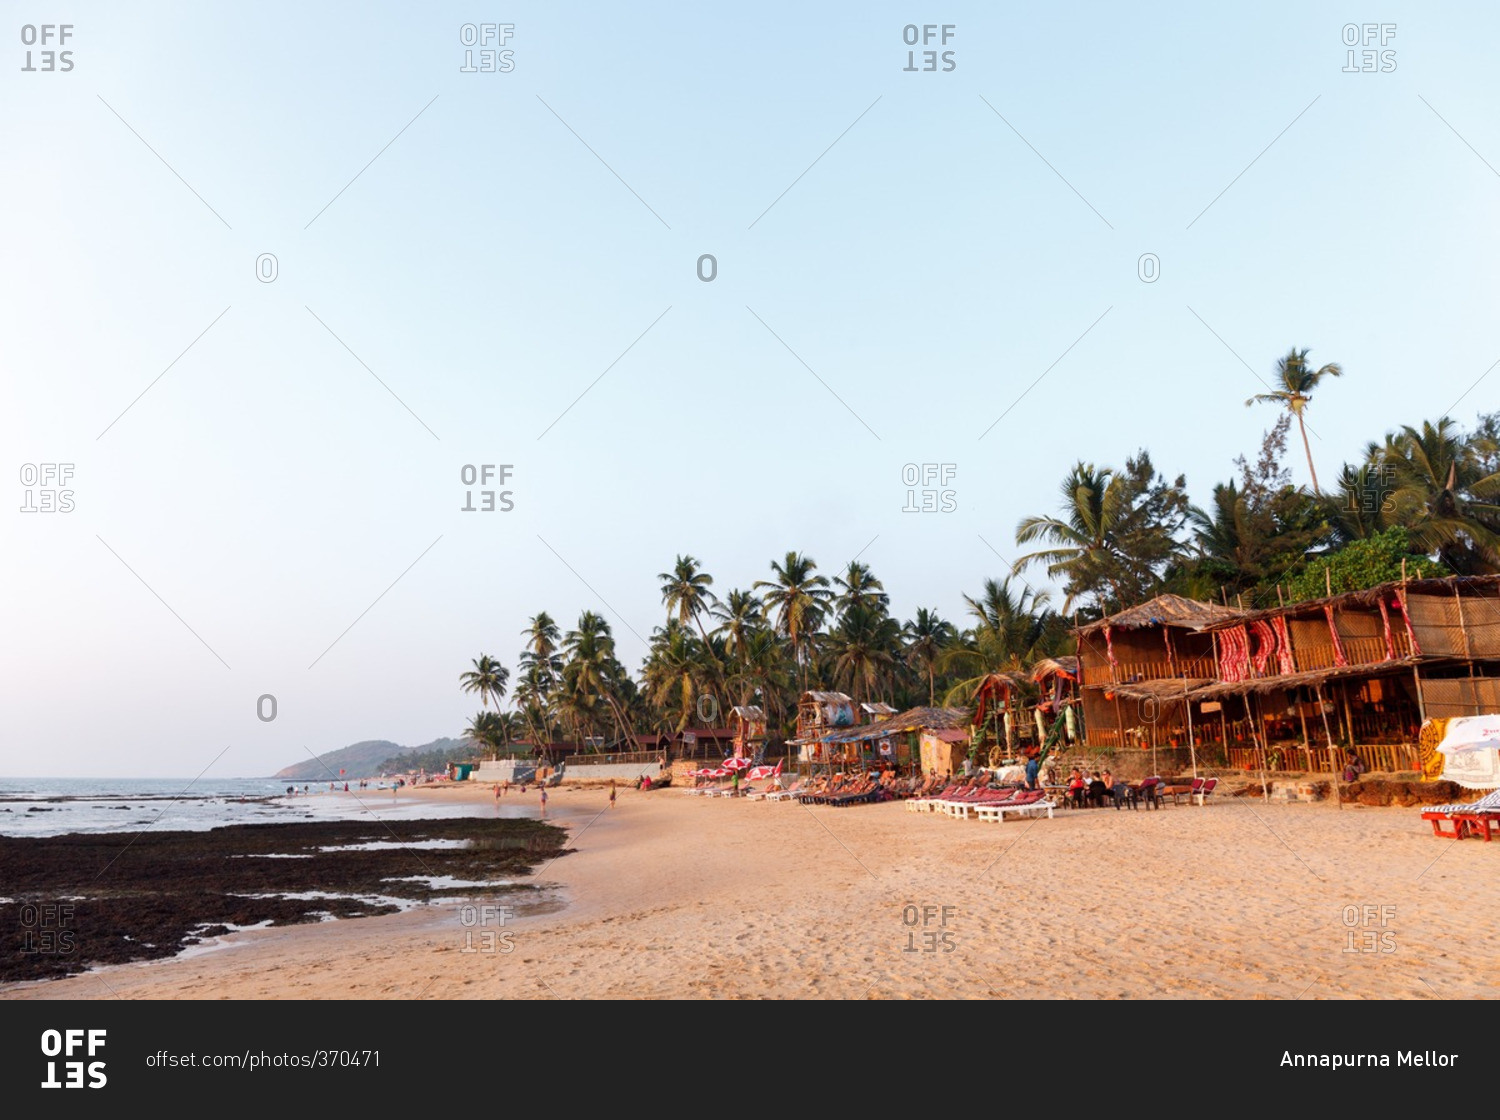 Resort area on an expanse of sandy beach